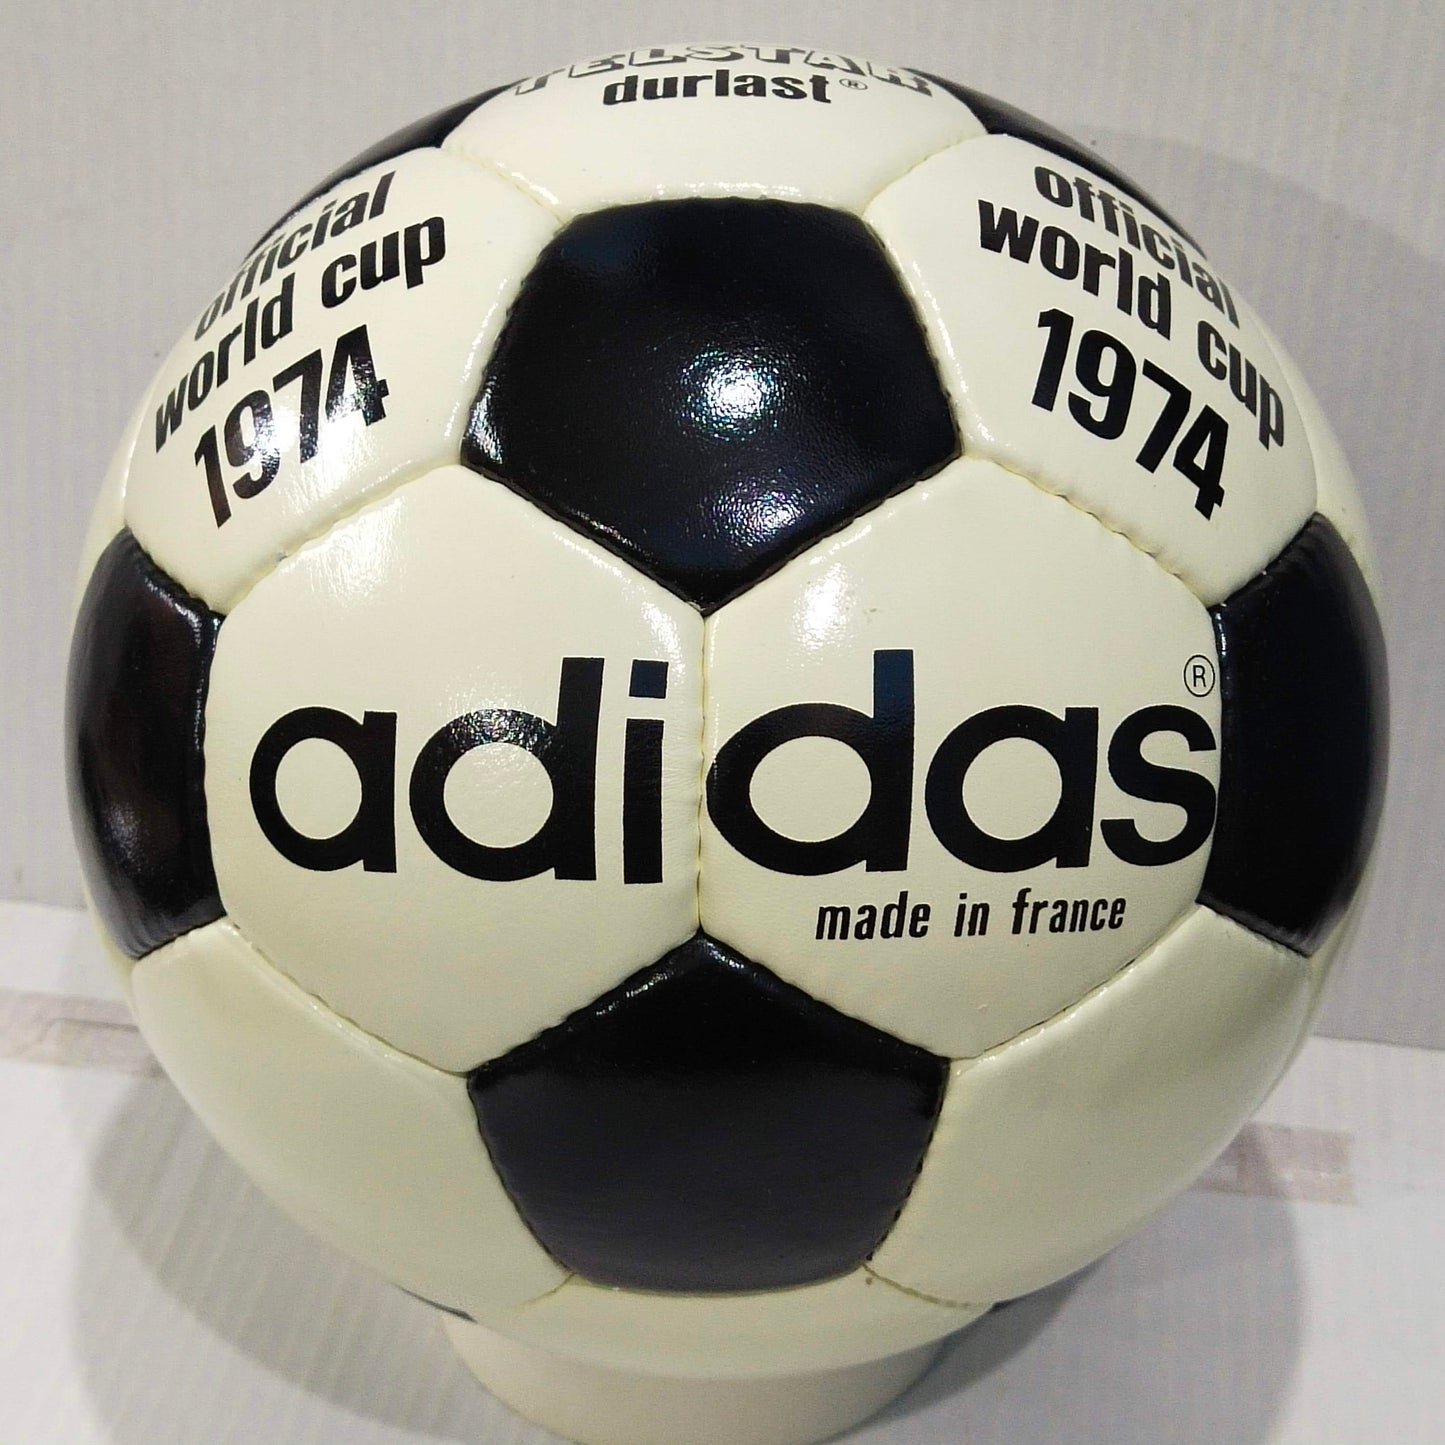 Adidas Telstar Durlast | 1974 FIFA World Cup Ball | Genuine Leather SIZE 5 02